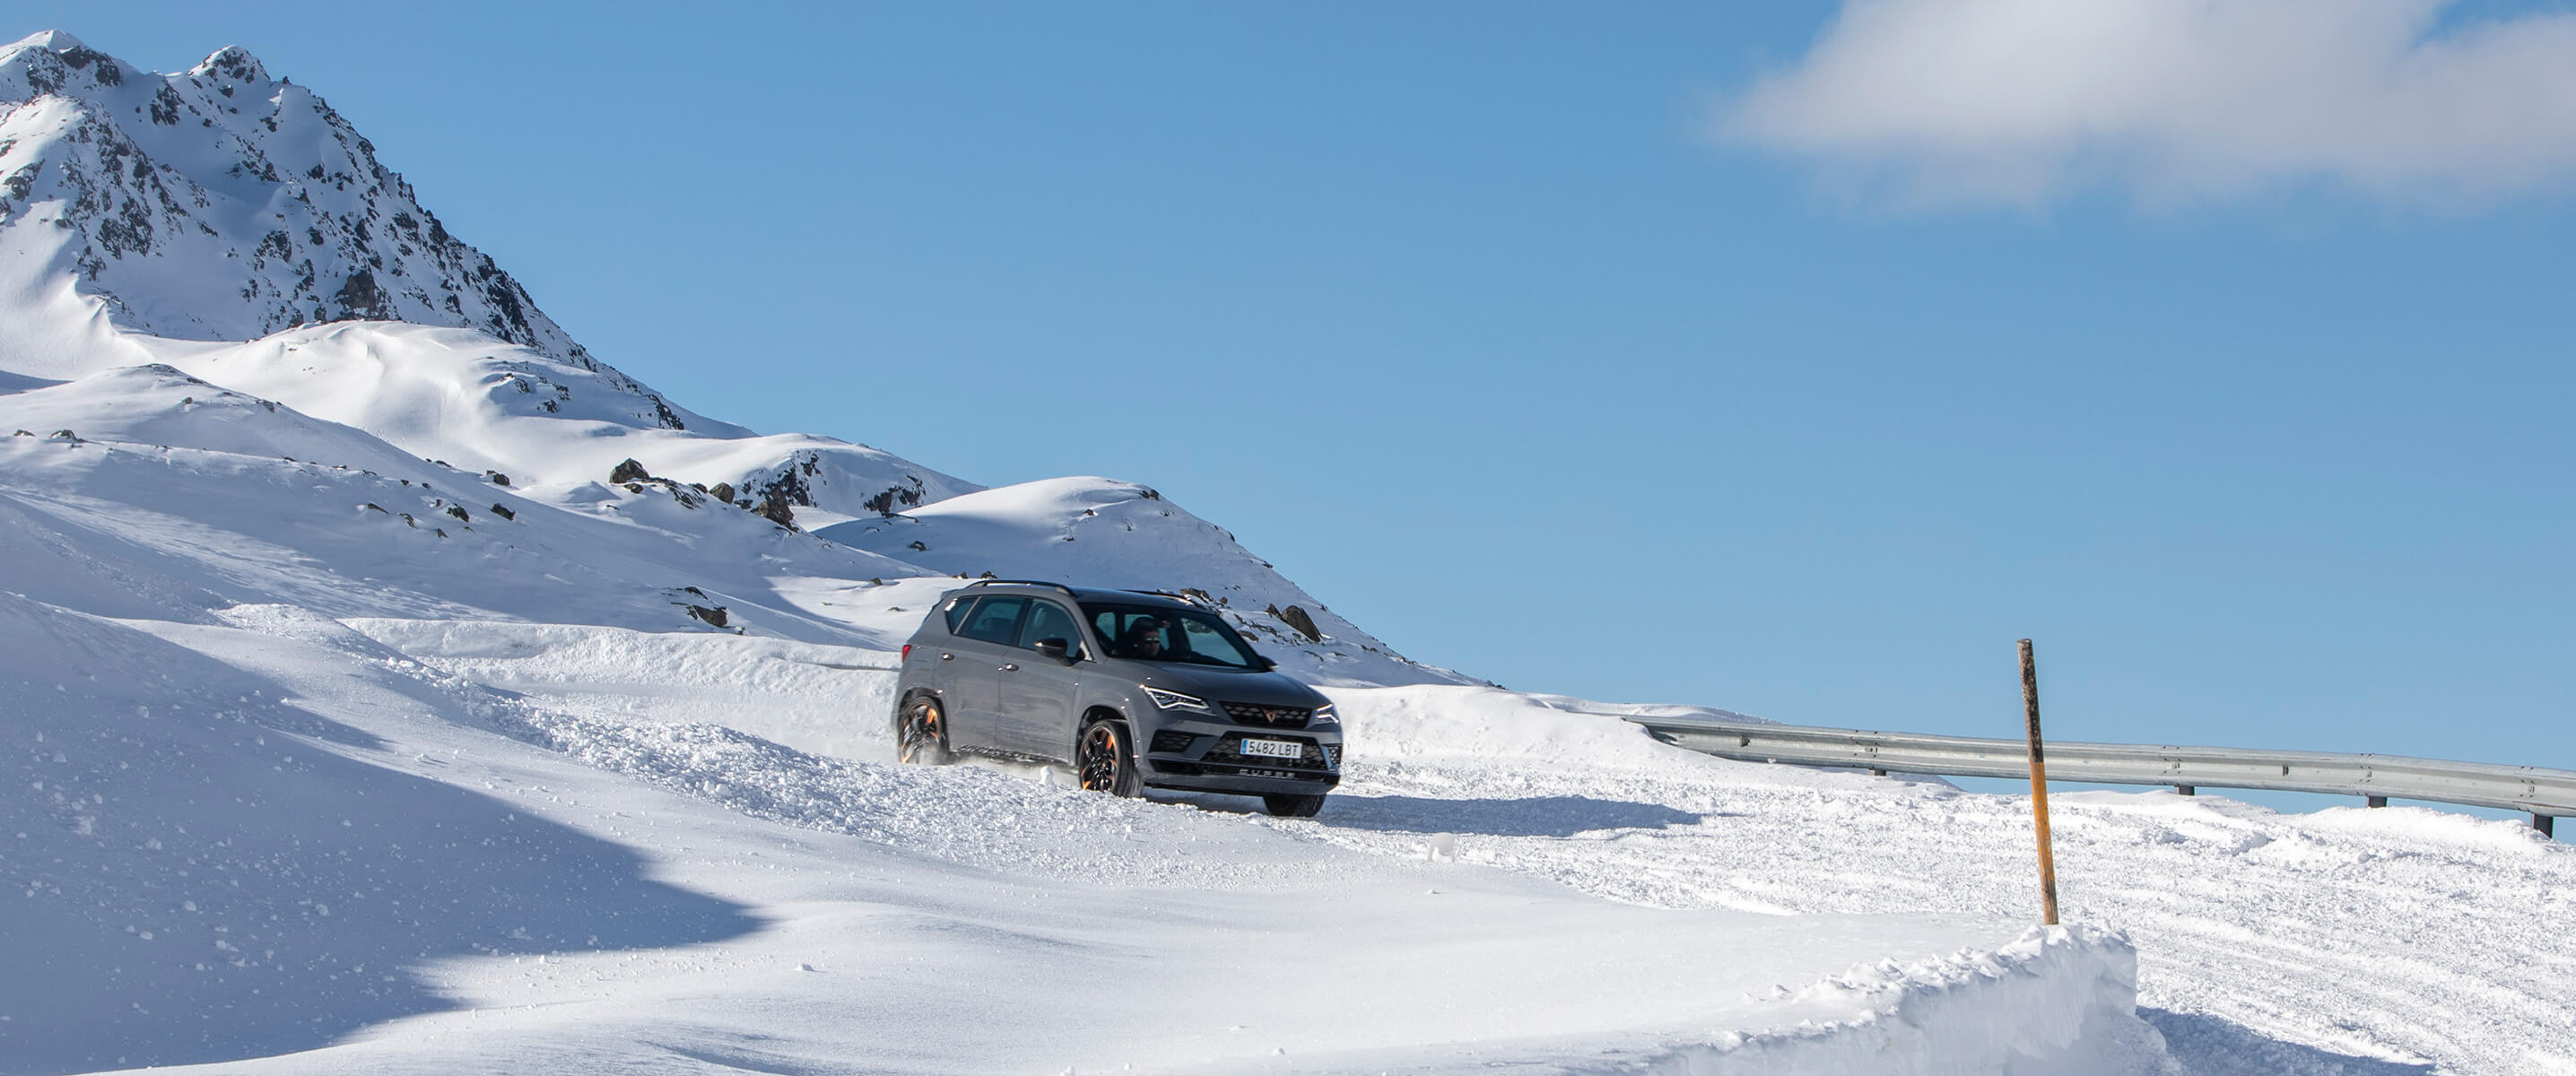 A CUPRA Ateca driving down a snowy mountainside